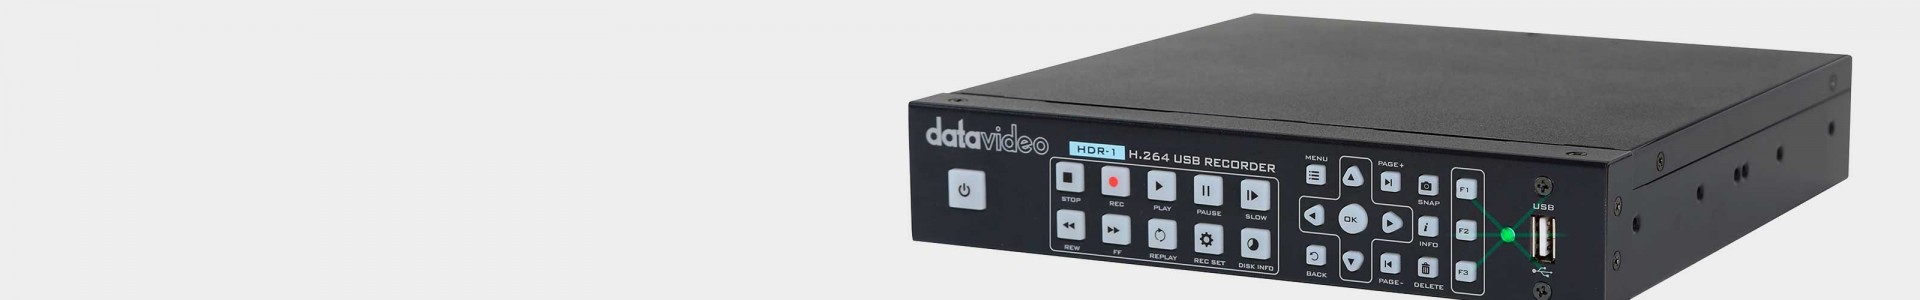 Datavideo Recorders